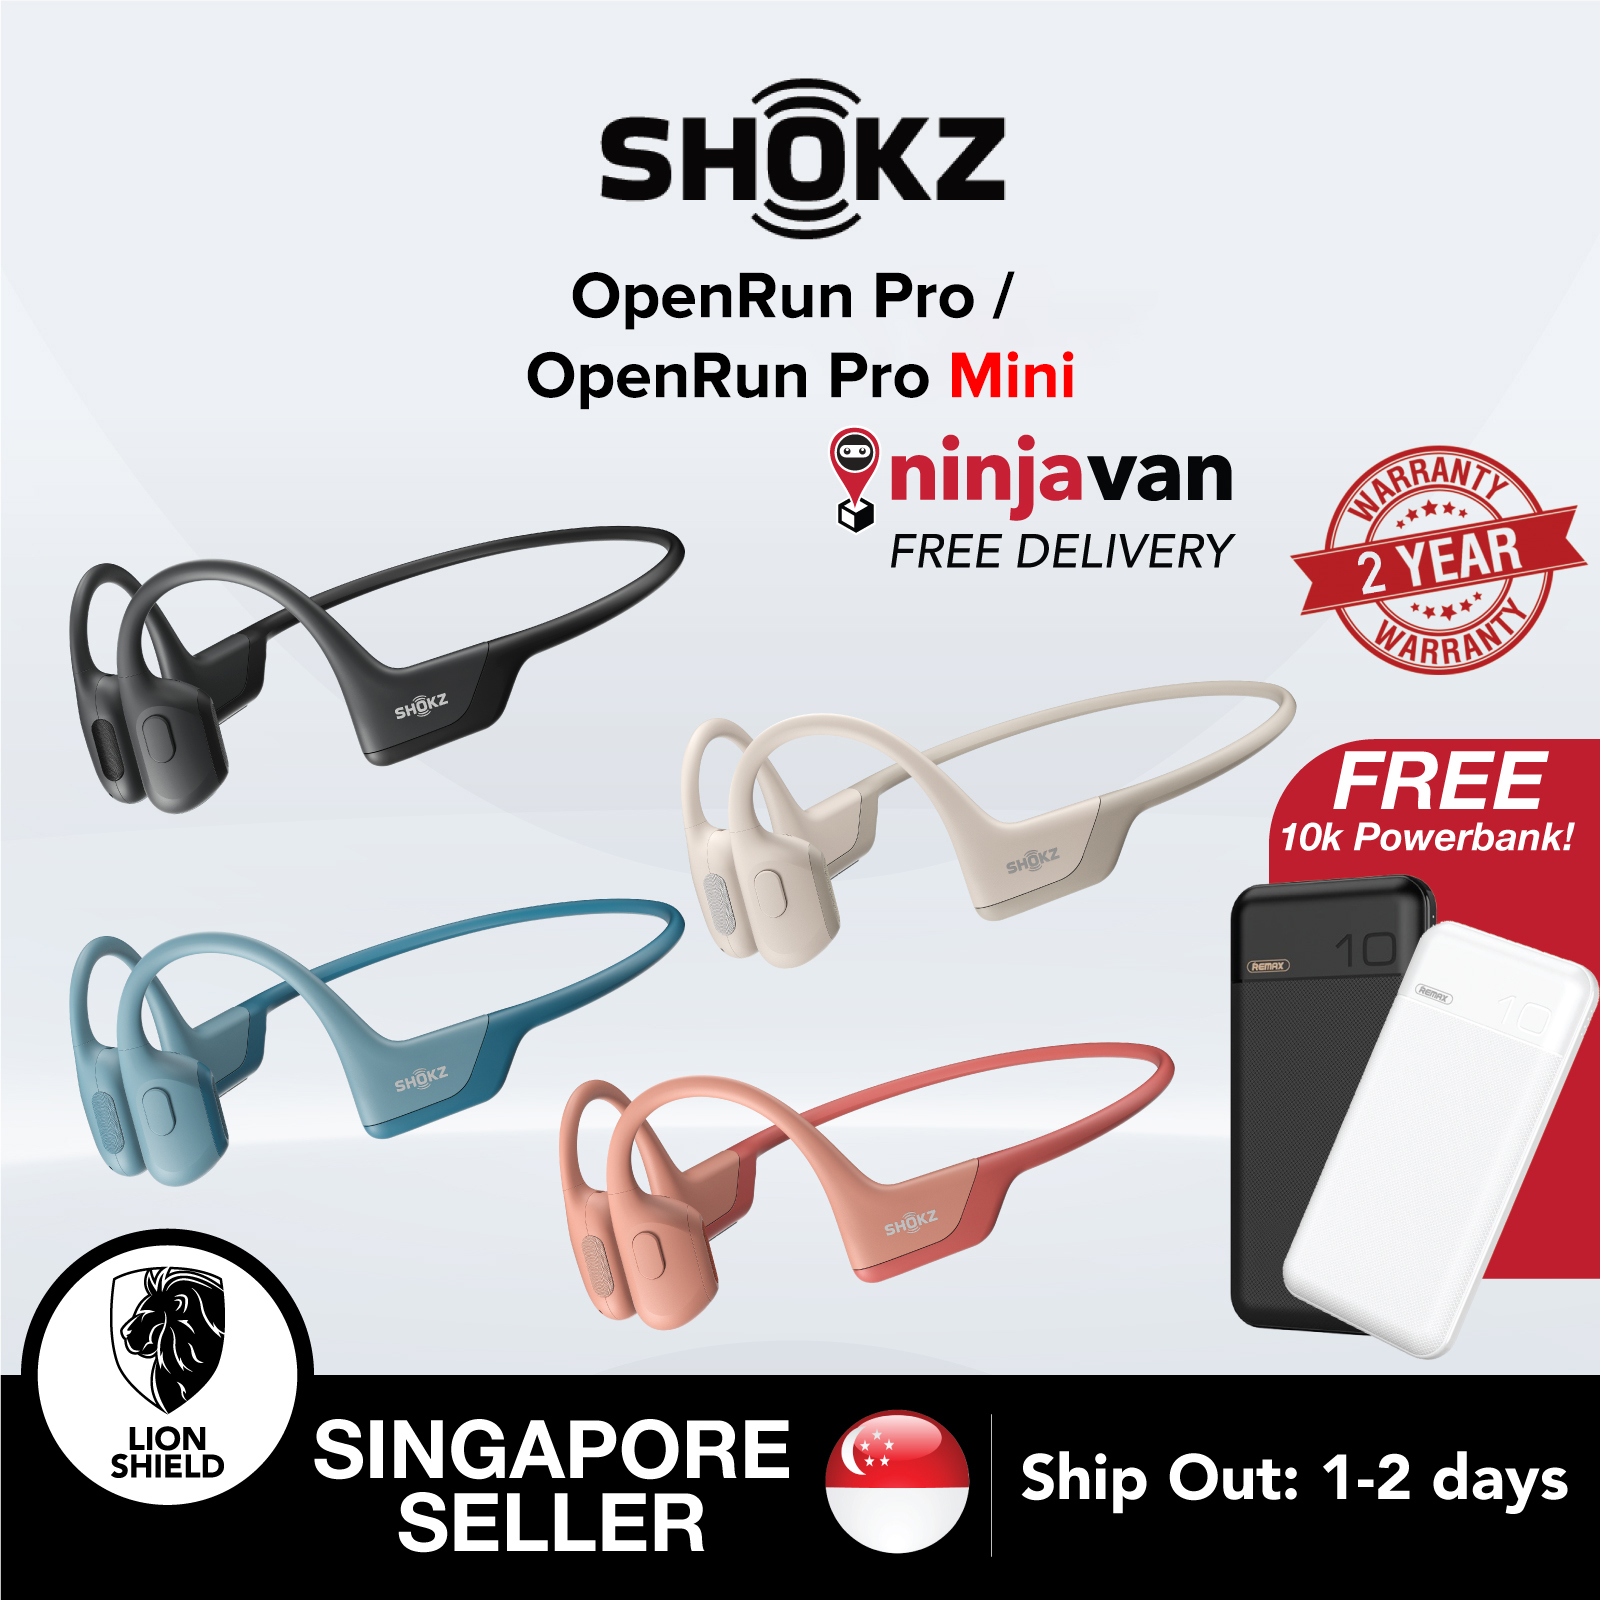 Shokz Headphones, Aftershokz Singapore